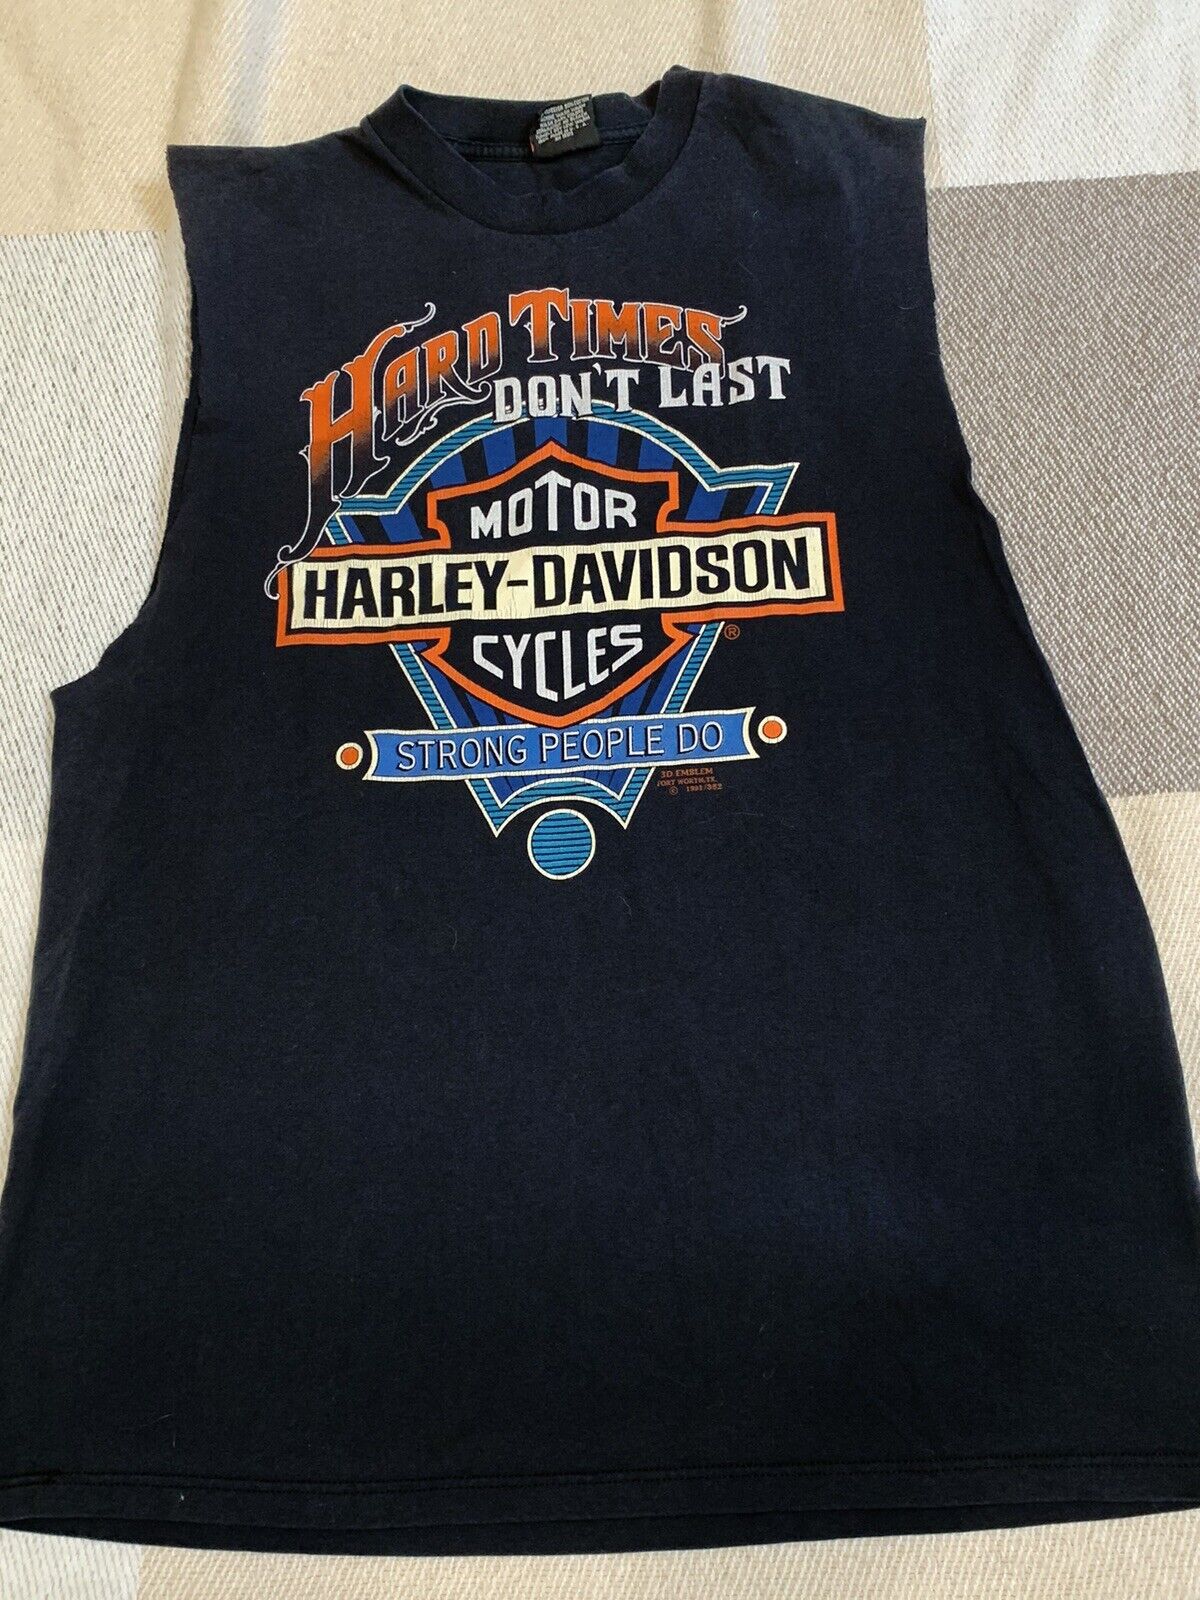 Harley Davidson Cutoff Shirt 1991